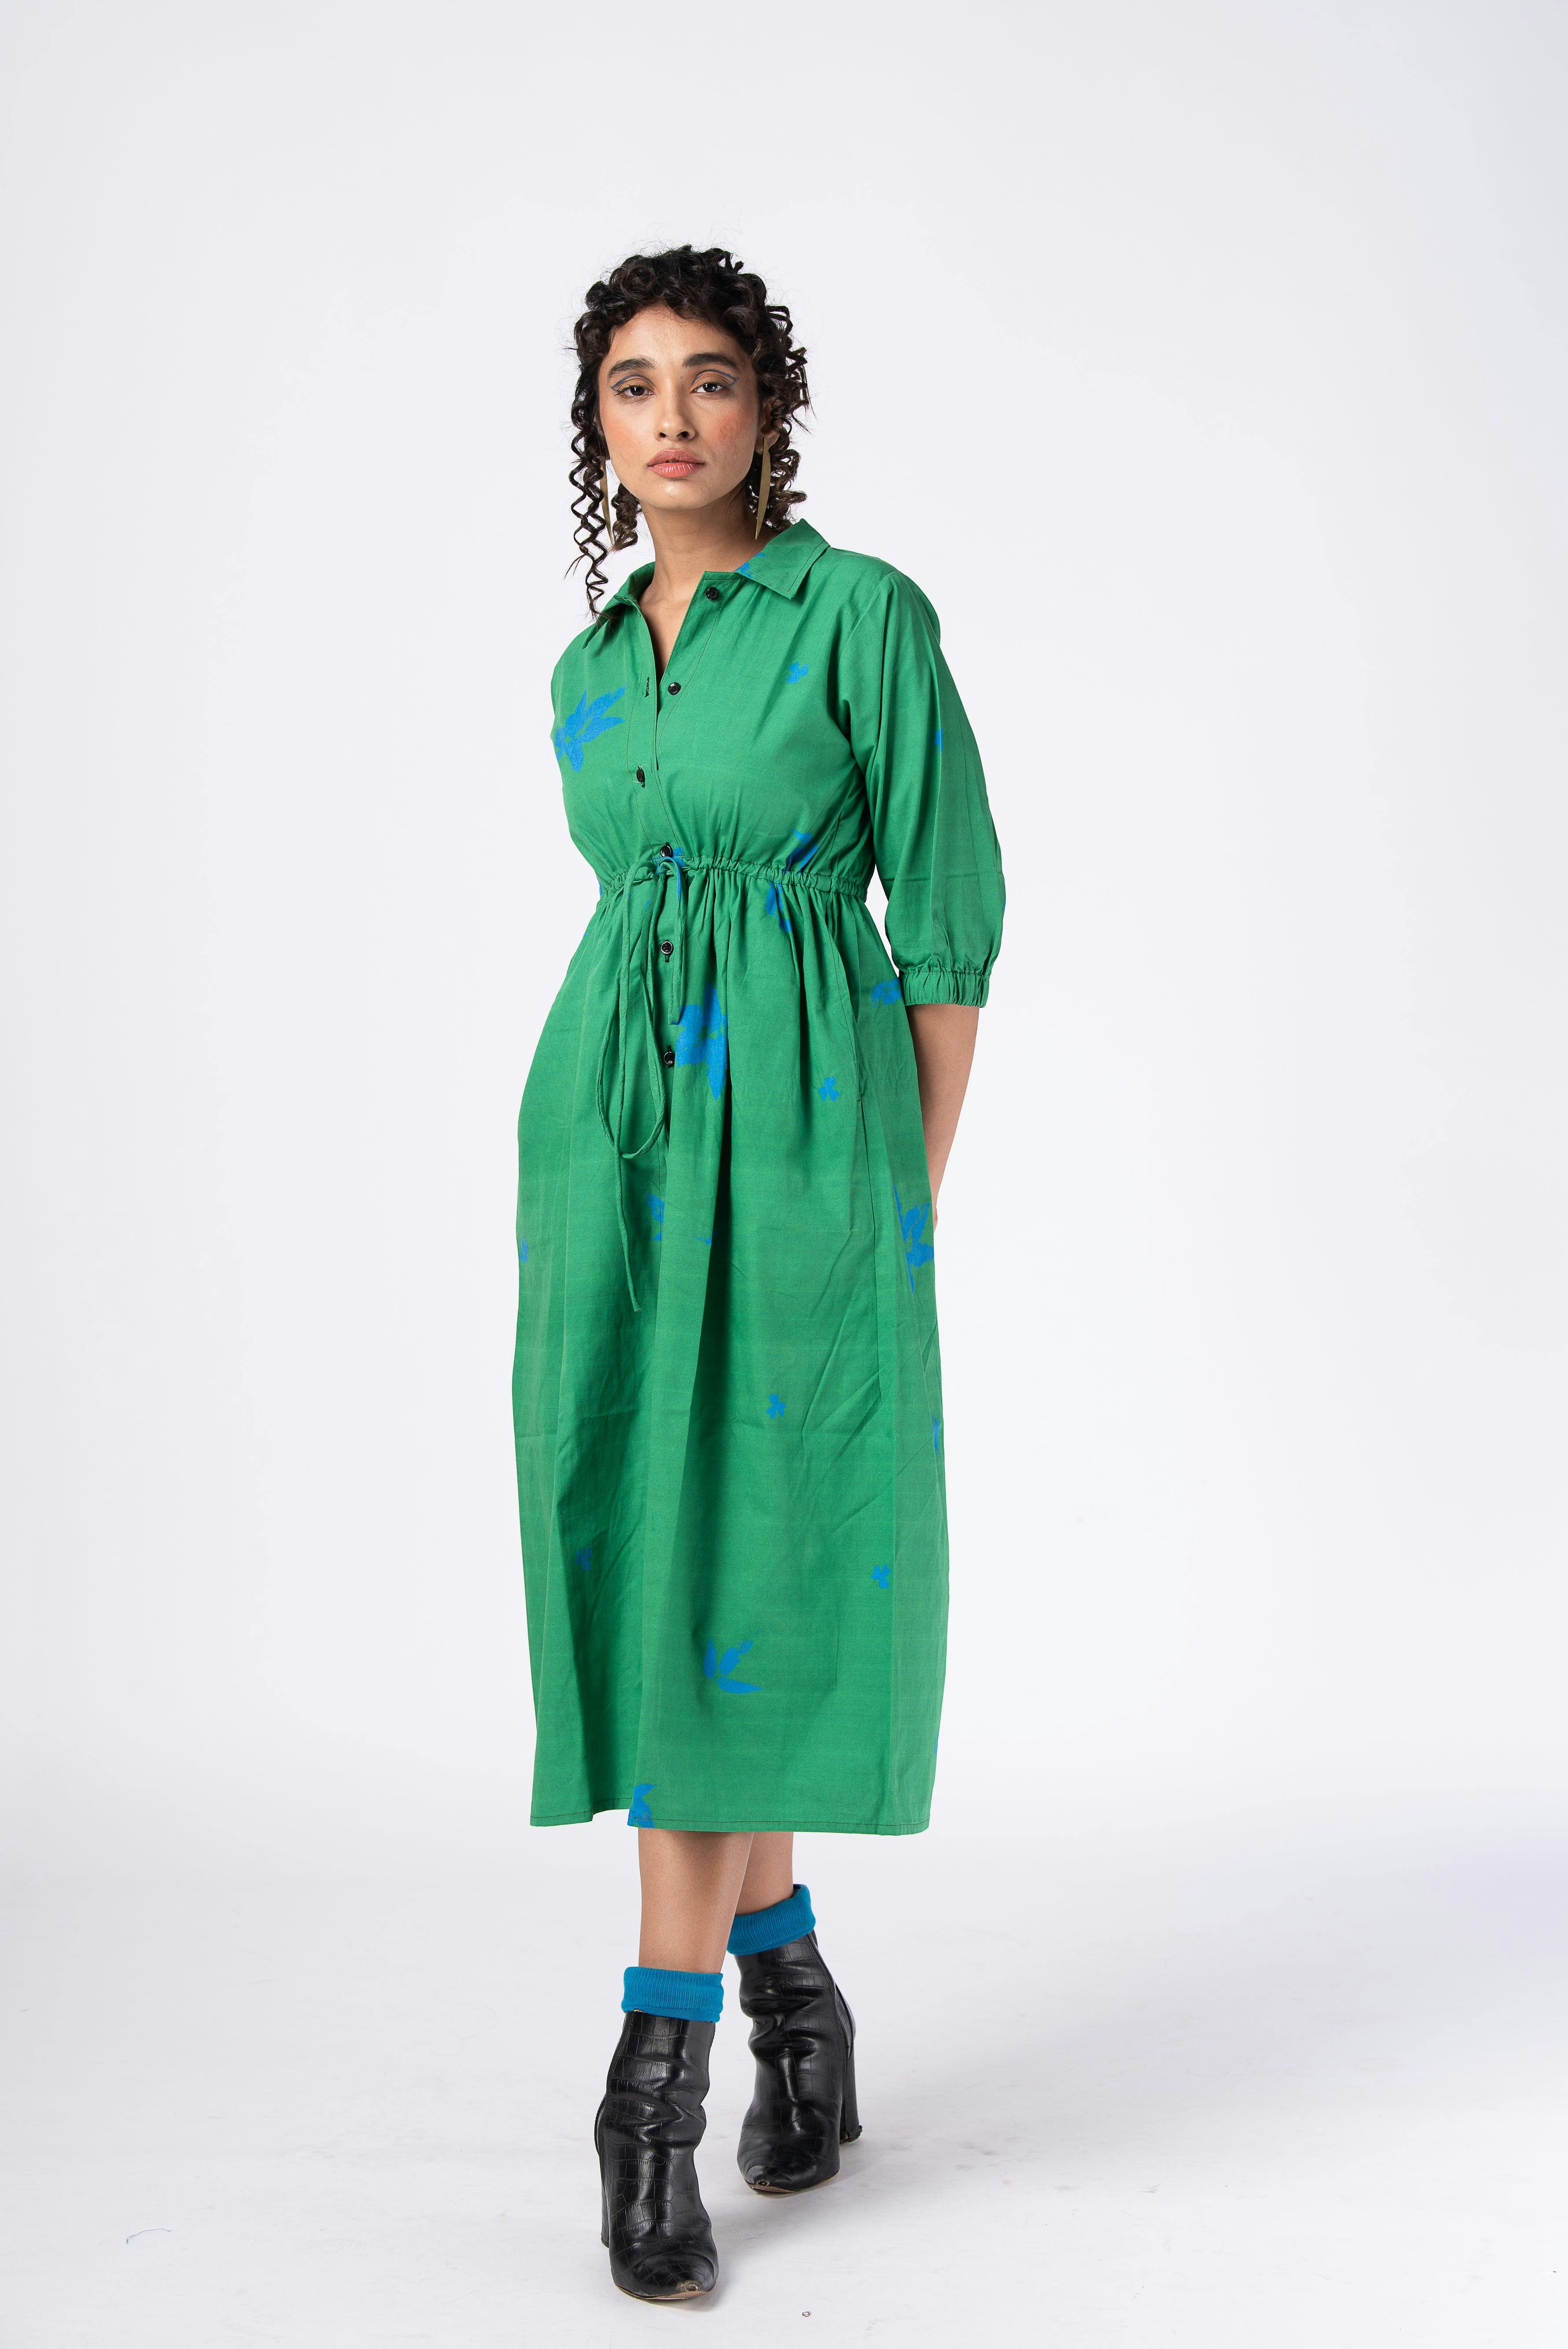 Green blossom [midi dress], a product by Radharaman